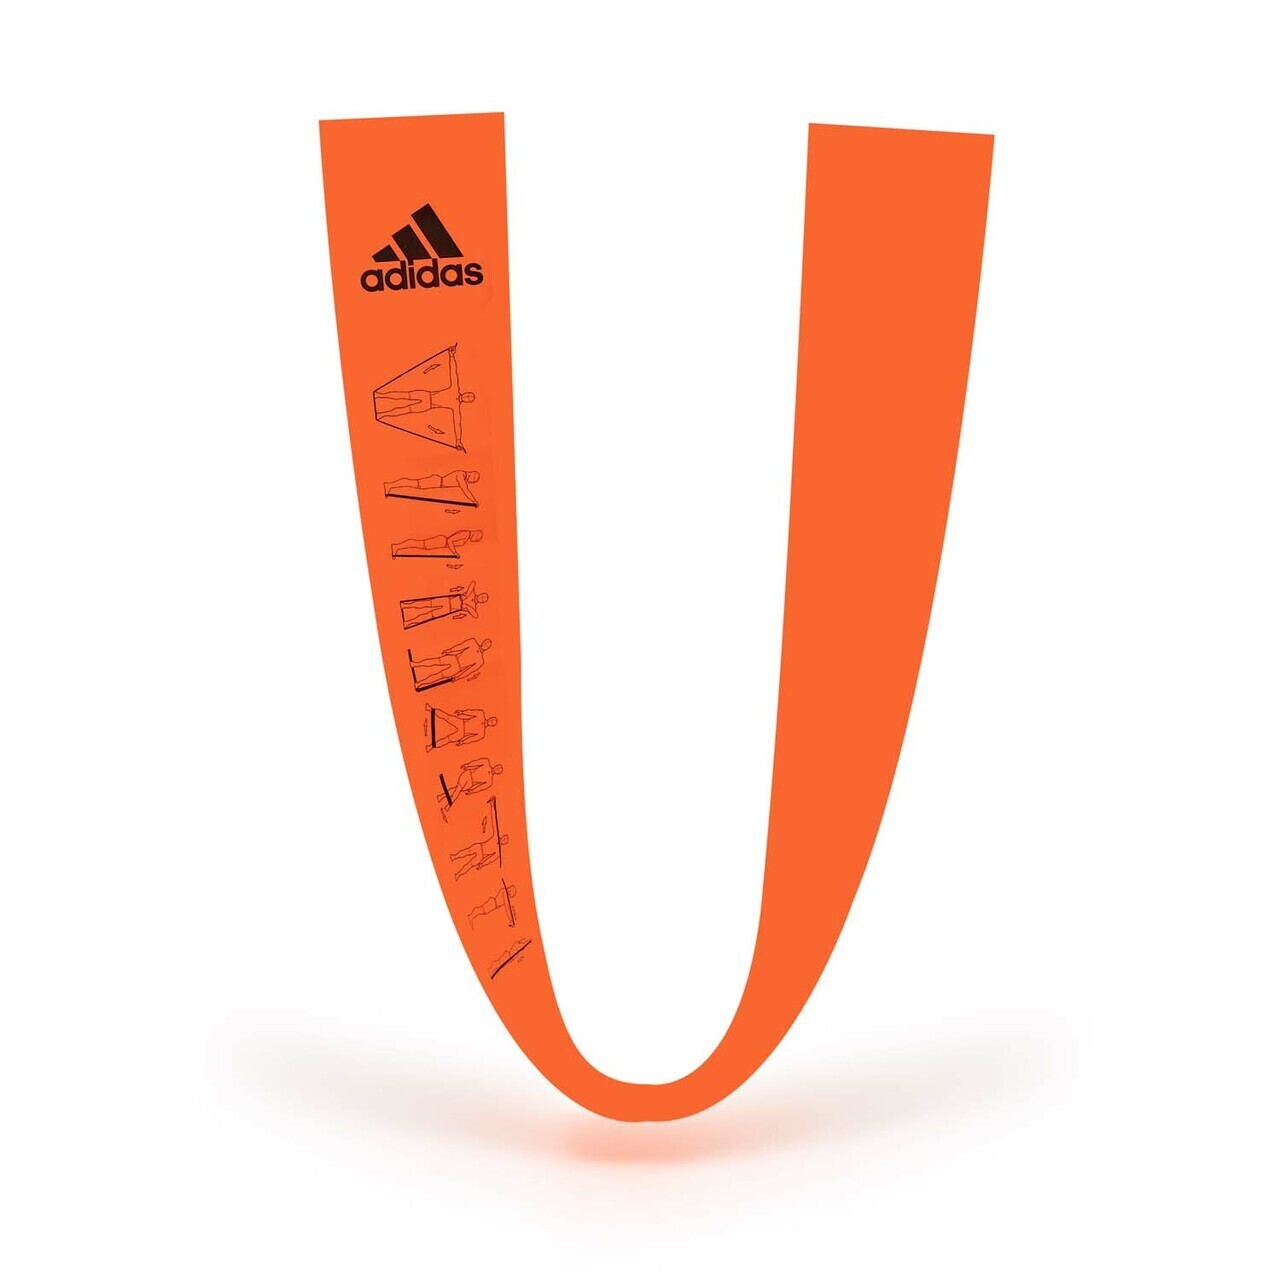 Adidas Training Bands Resistance Rally Training Workout Strap - 2x Blue&Orange